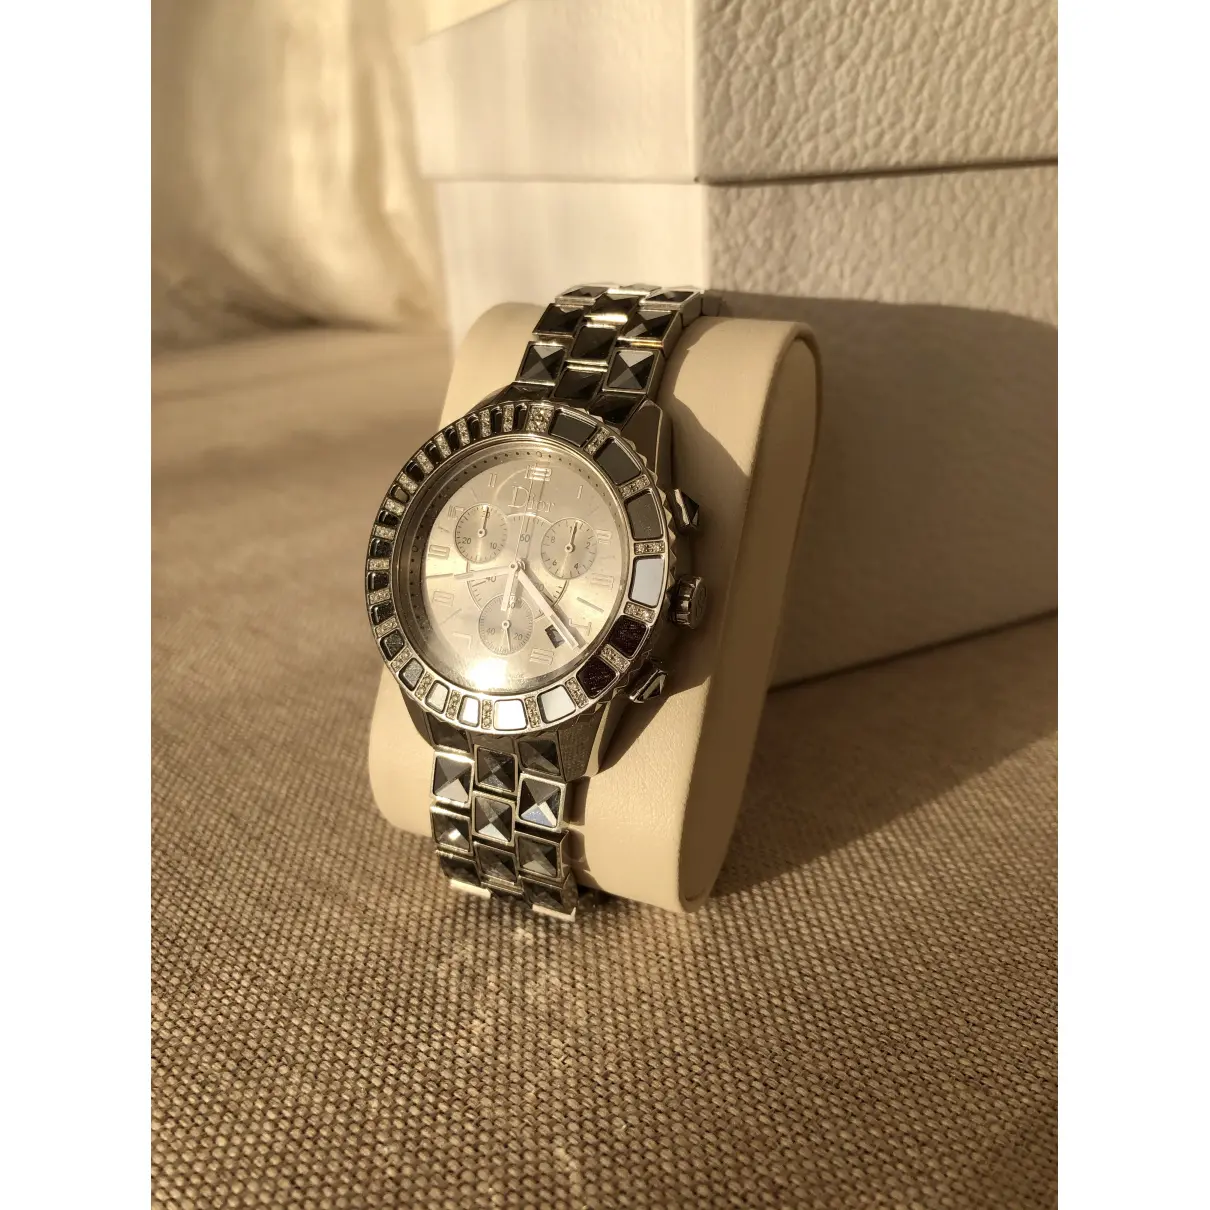 Buy Dior Christal watch online